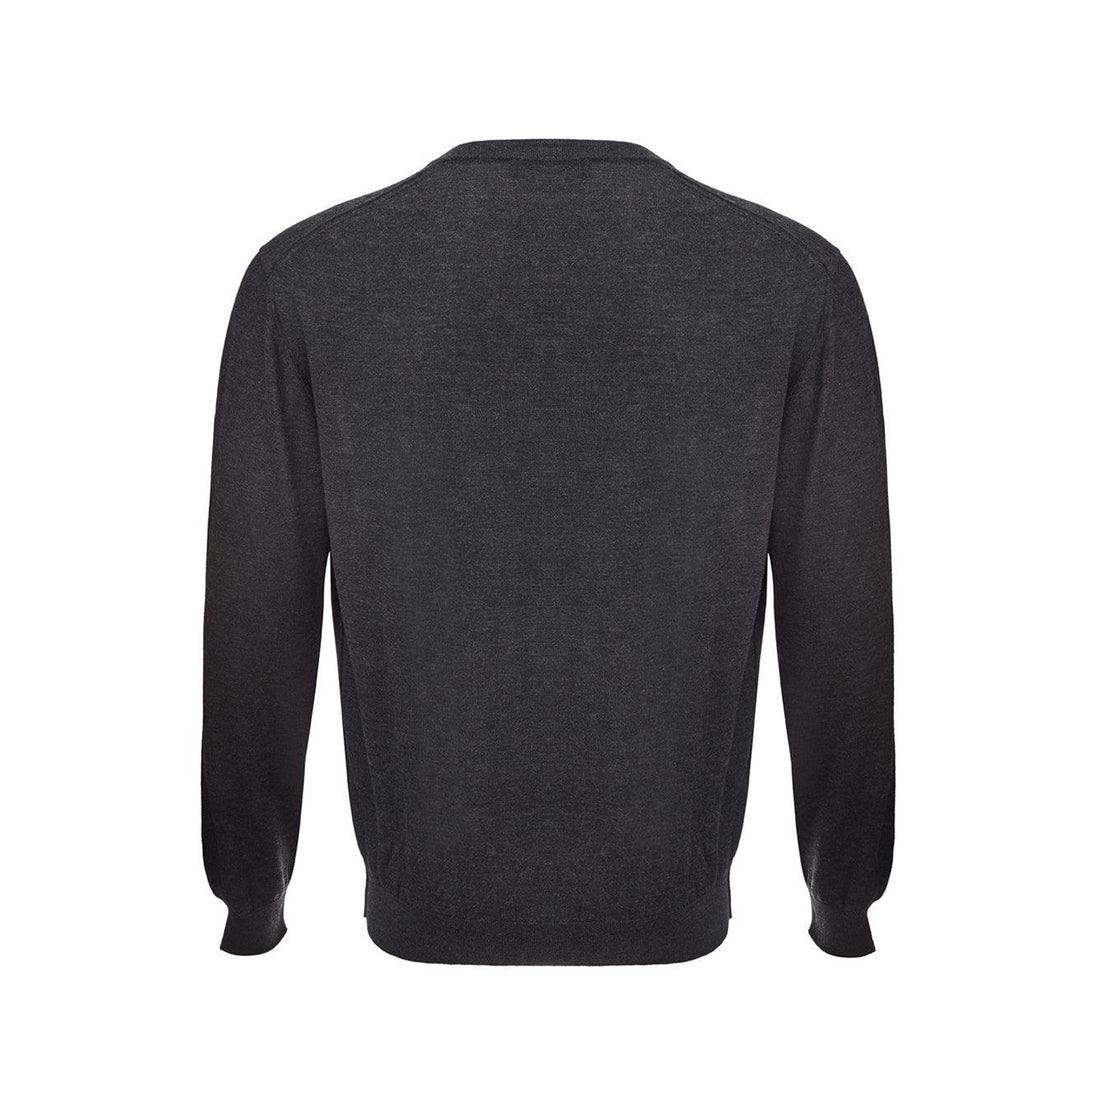 Dolce & Gabbana Italian Cashmere V-Neck Sweater - Dark Grey